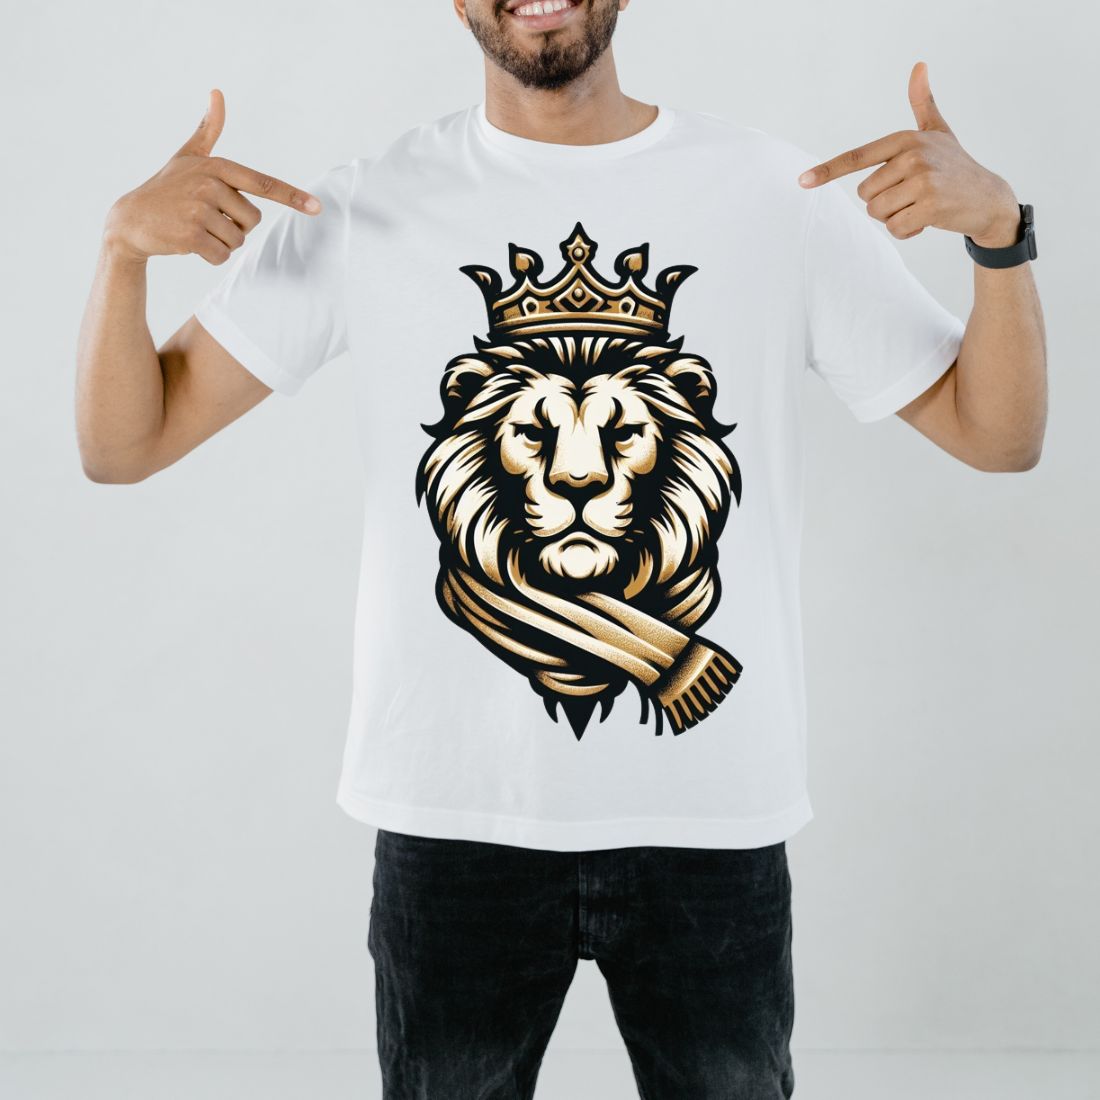 King lion design preview image.